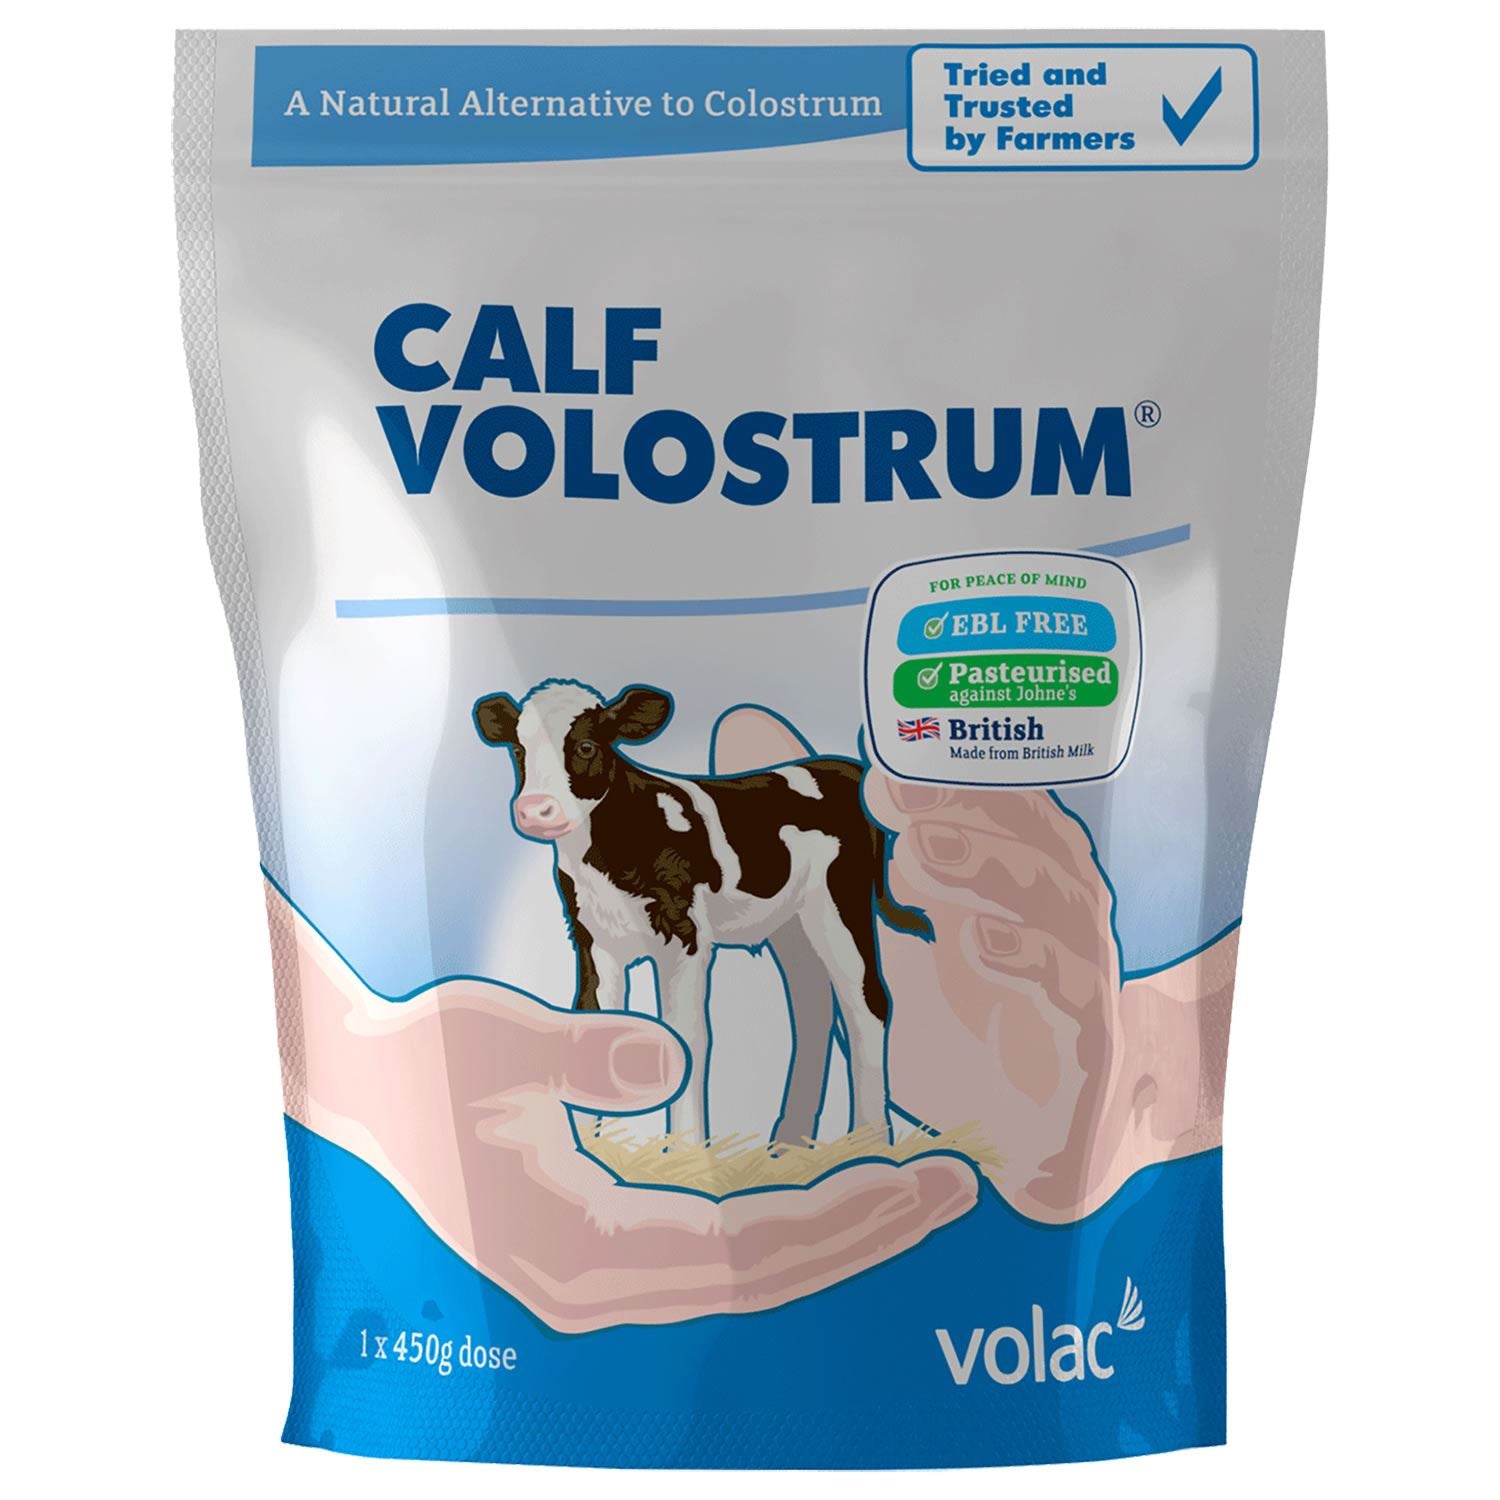 Volac Calf Volostrum - Just Horse Riders